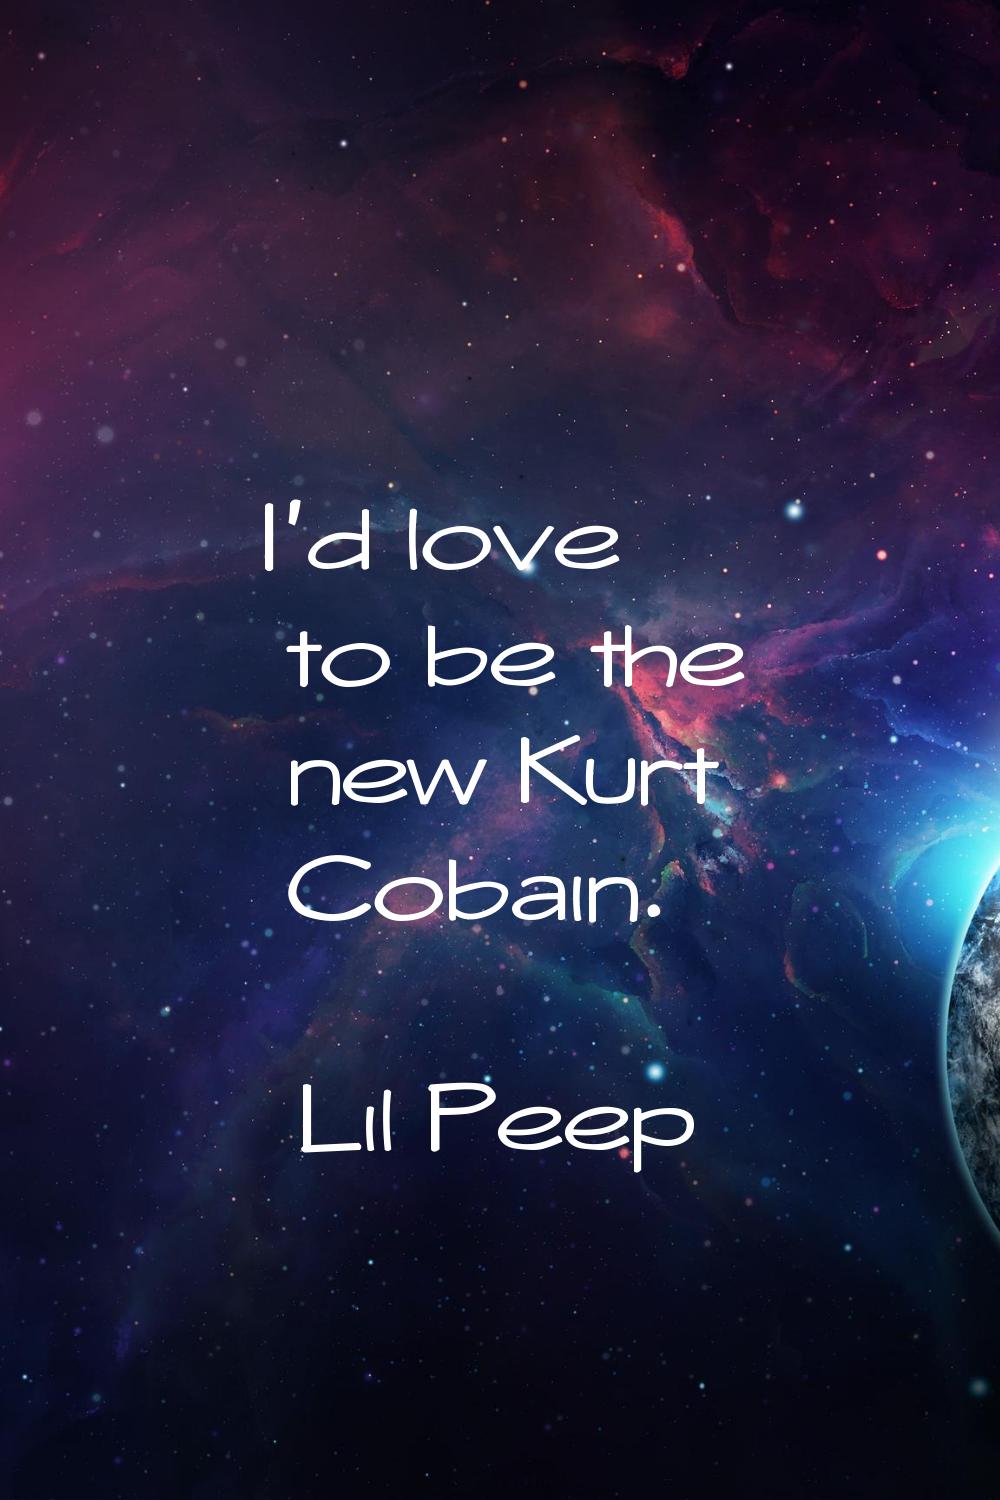 I'd love to be the new Kurt Cobain.